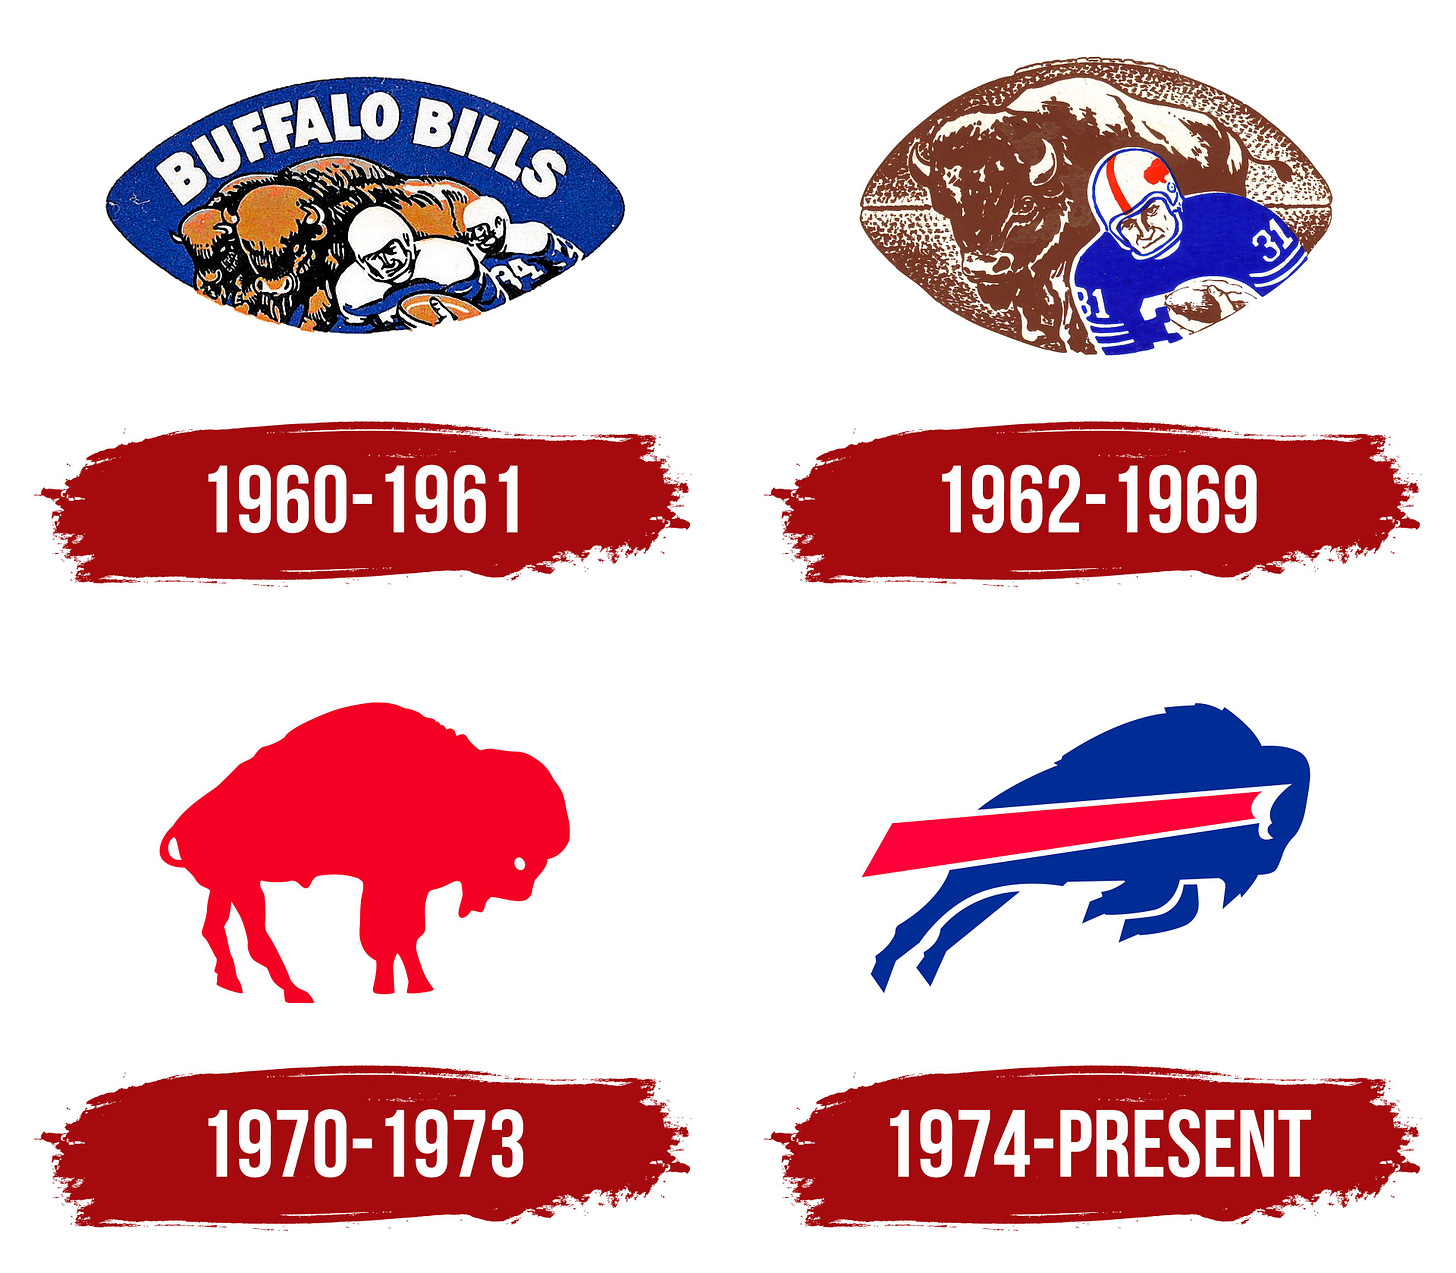 Buffalo Bills Logo, symbol, meaning, history, PNG, brand